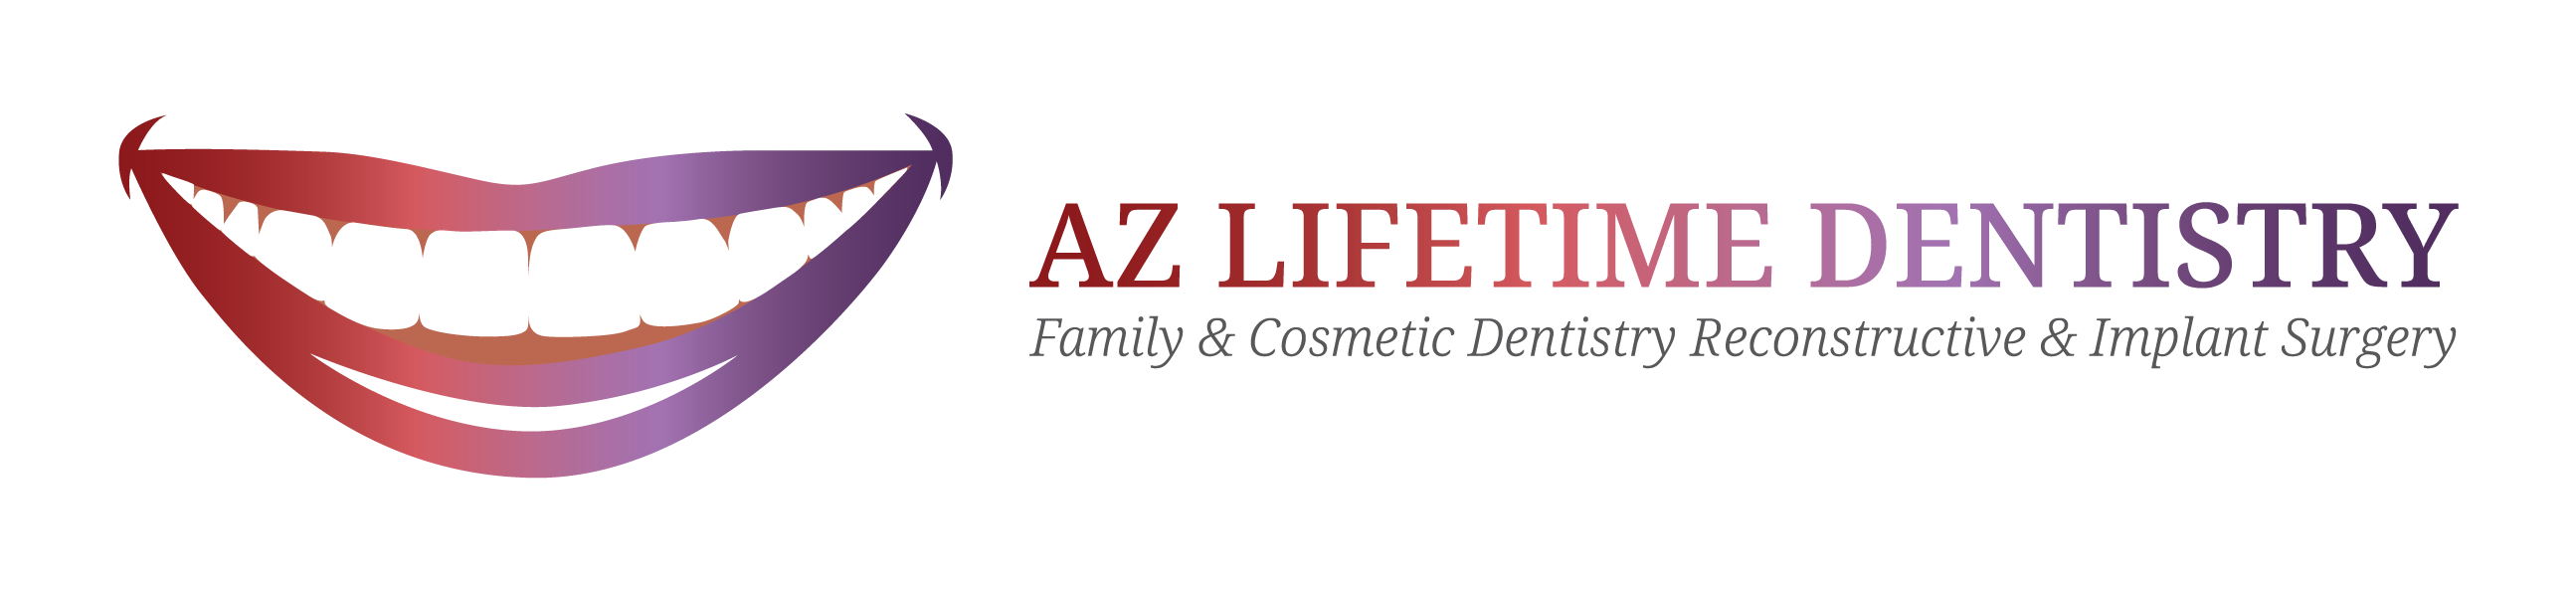 AZ Lifetime Dentistry